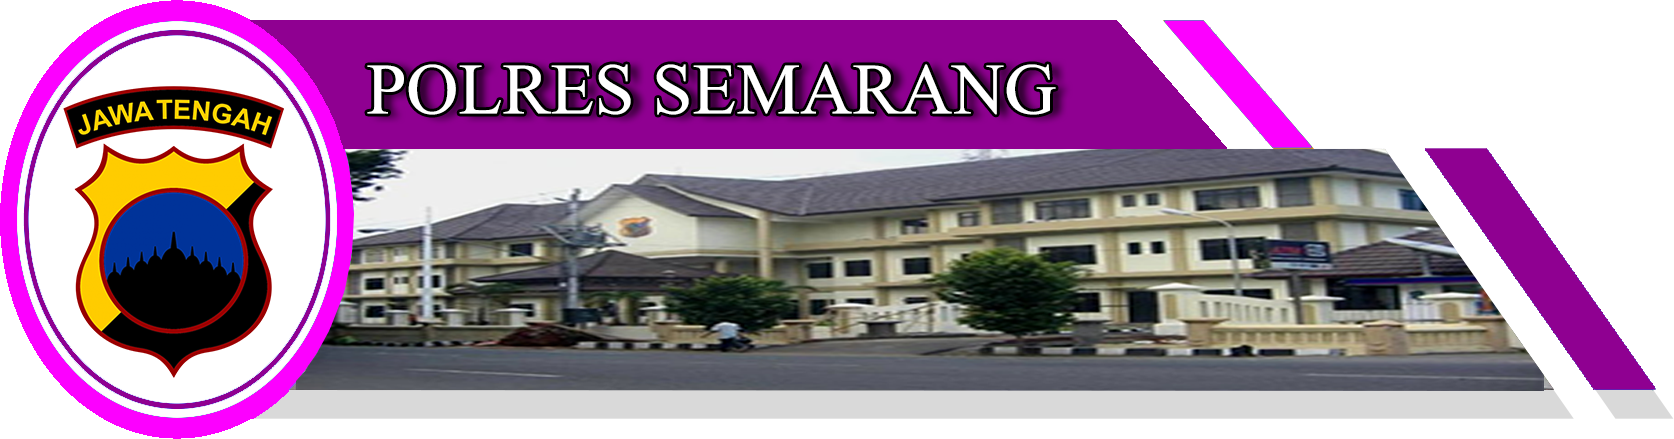 107 Polres Semarang